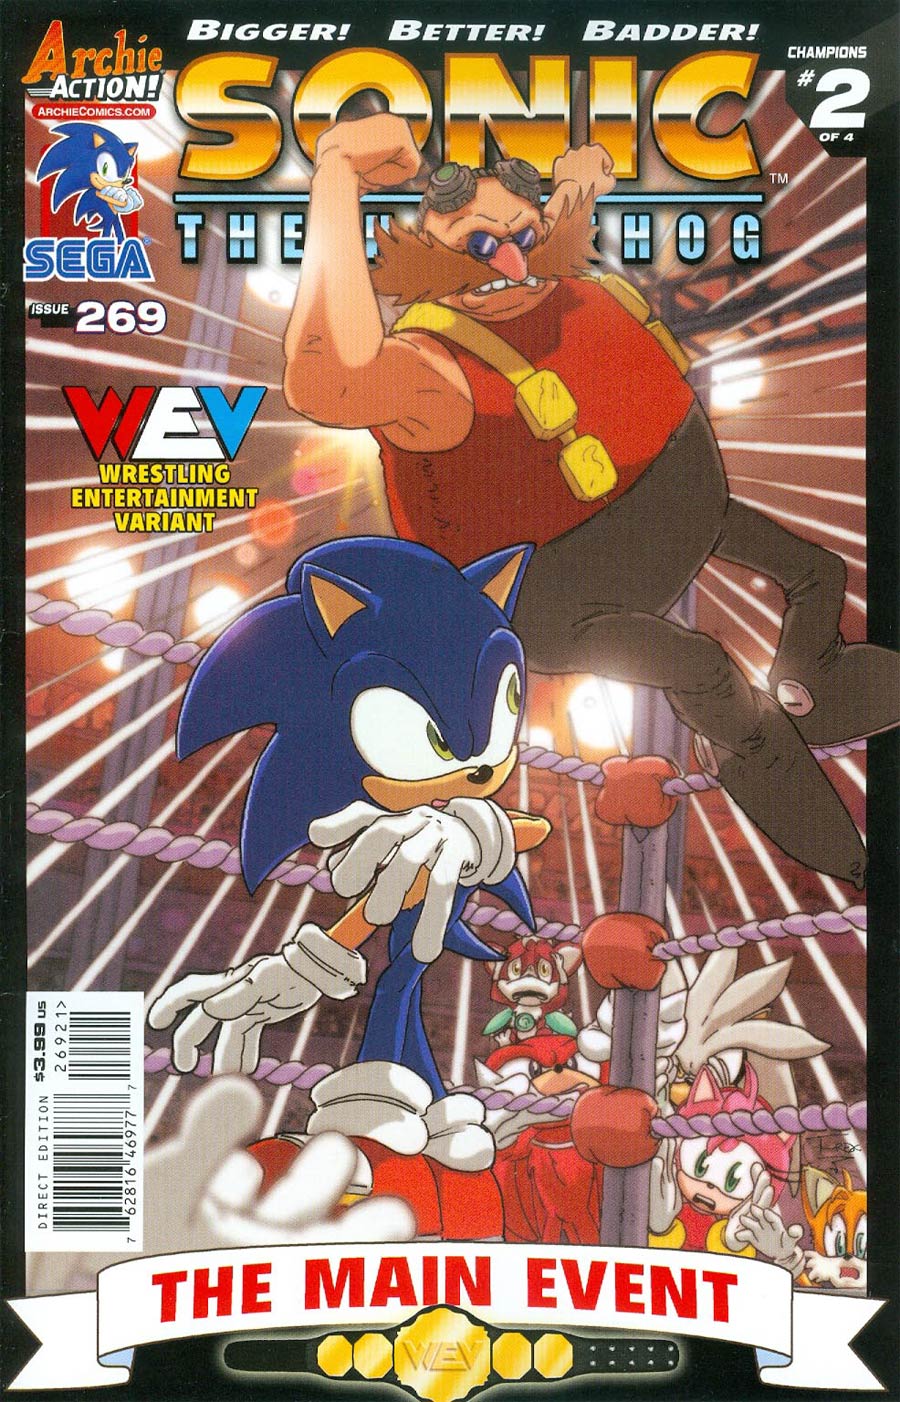 Sonic The Hedgehog Vol 2 #269 Cover B Variant WEV Wrestling Entertainment Cover